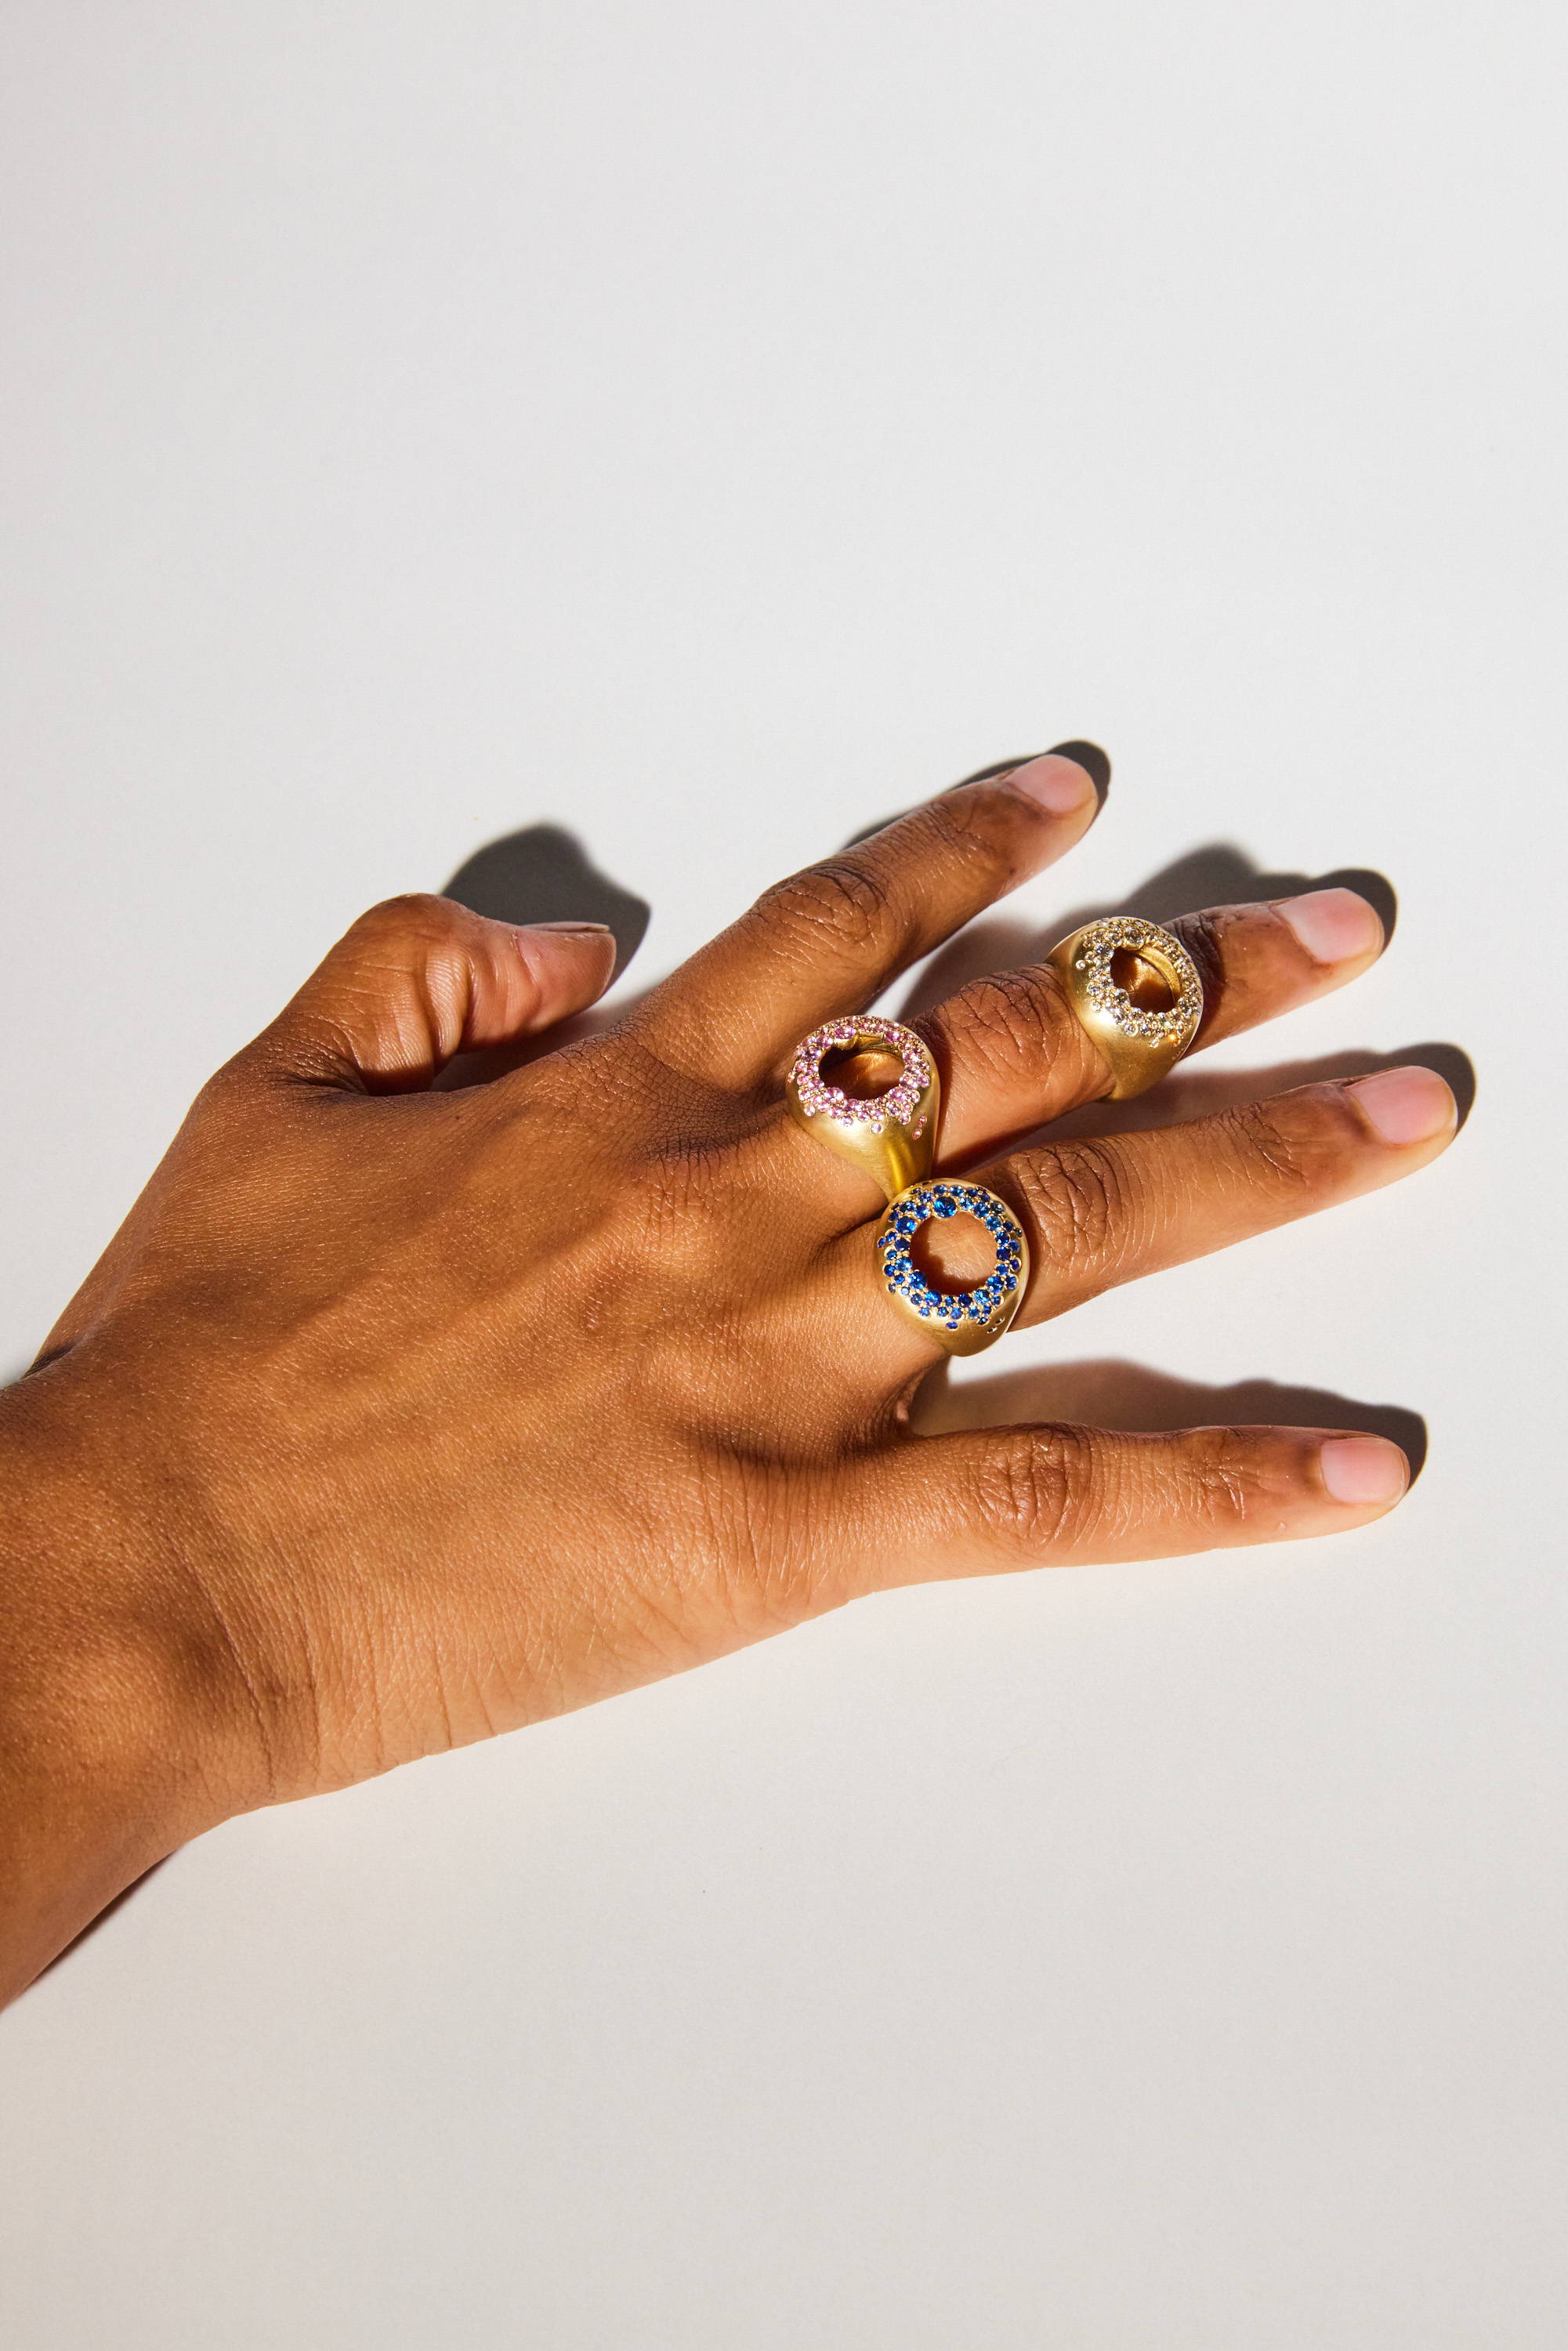 hand wearing three rings